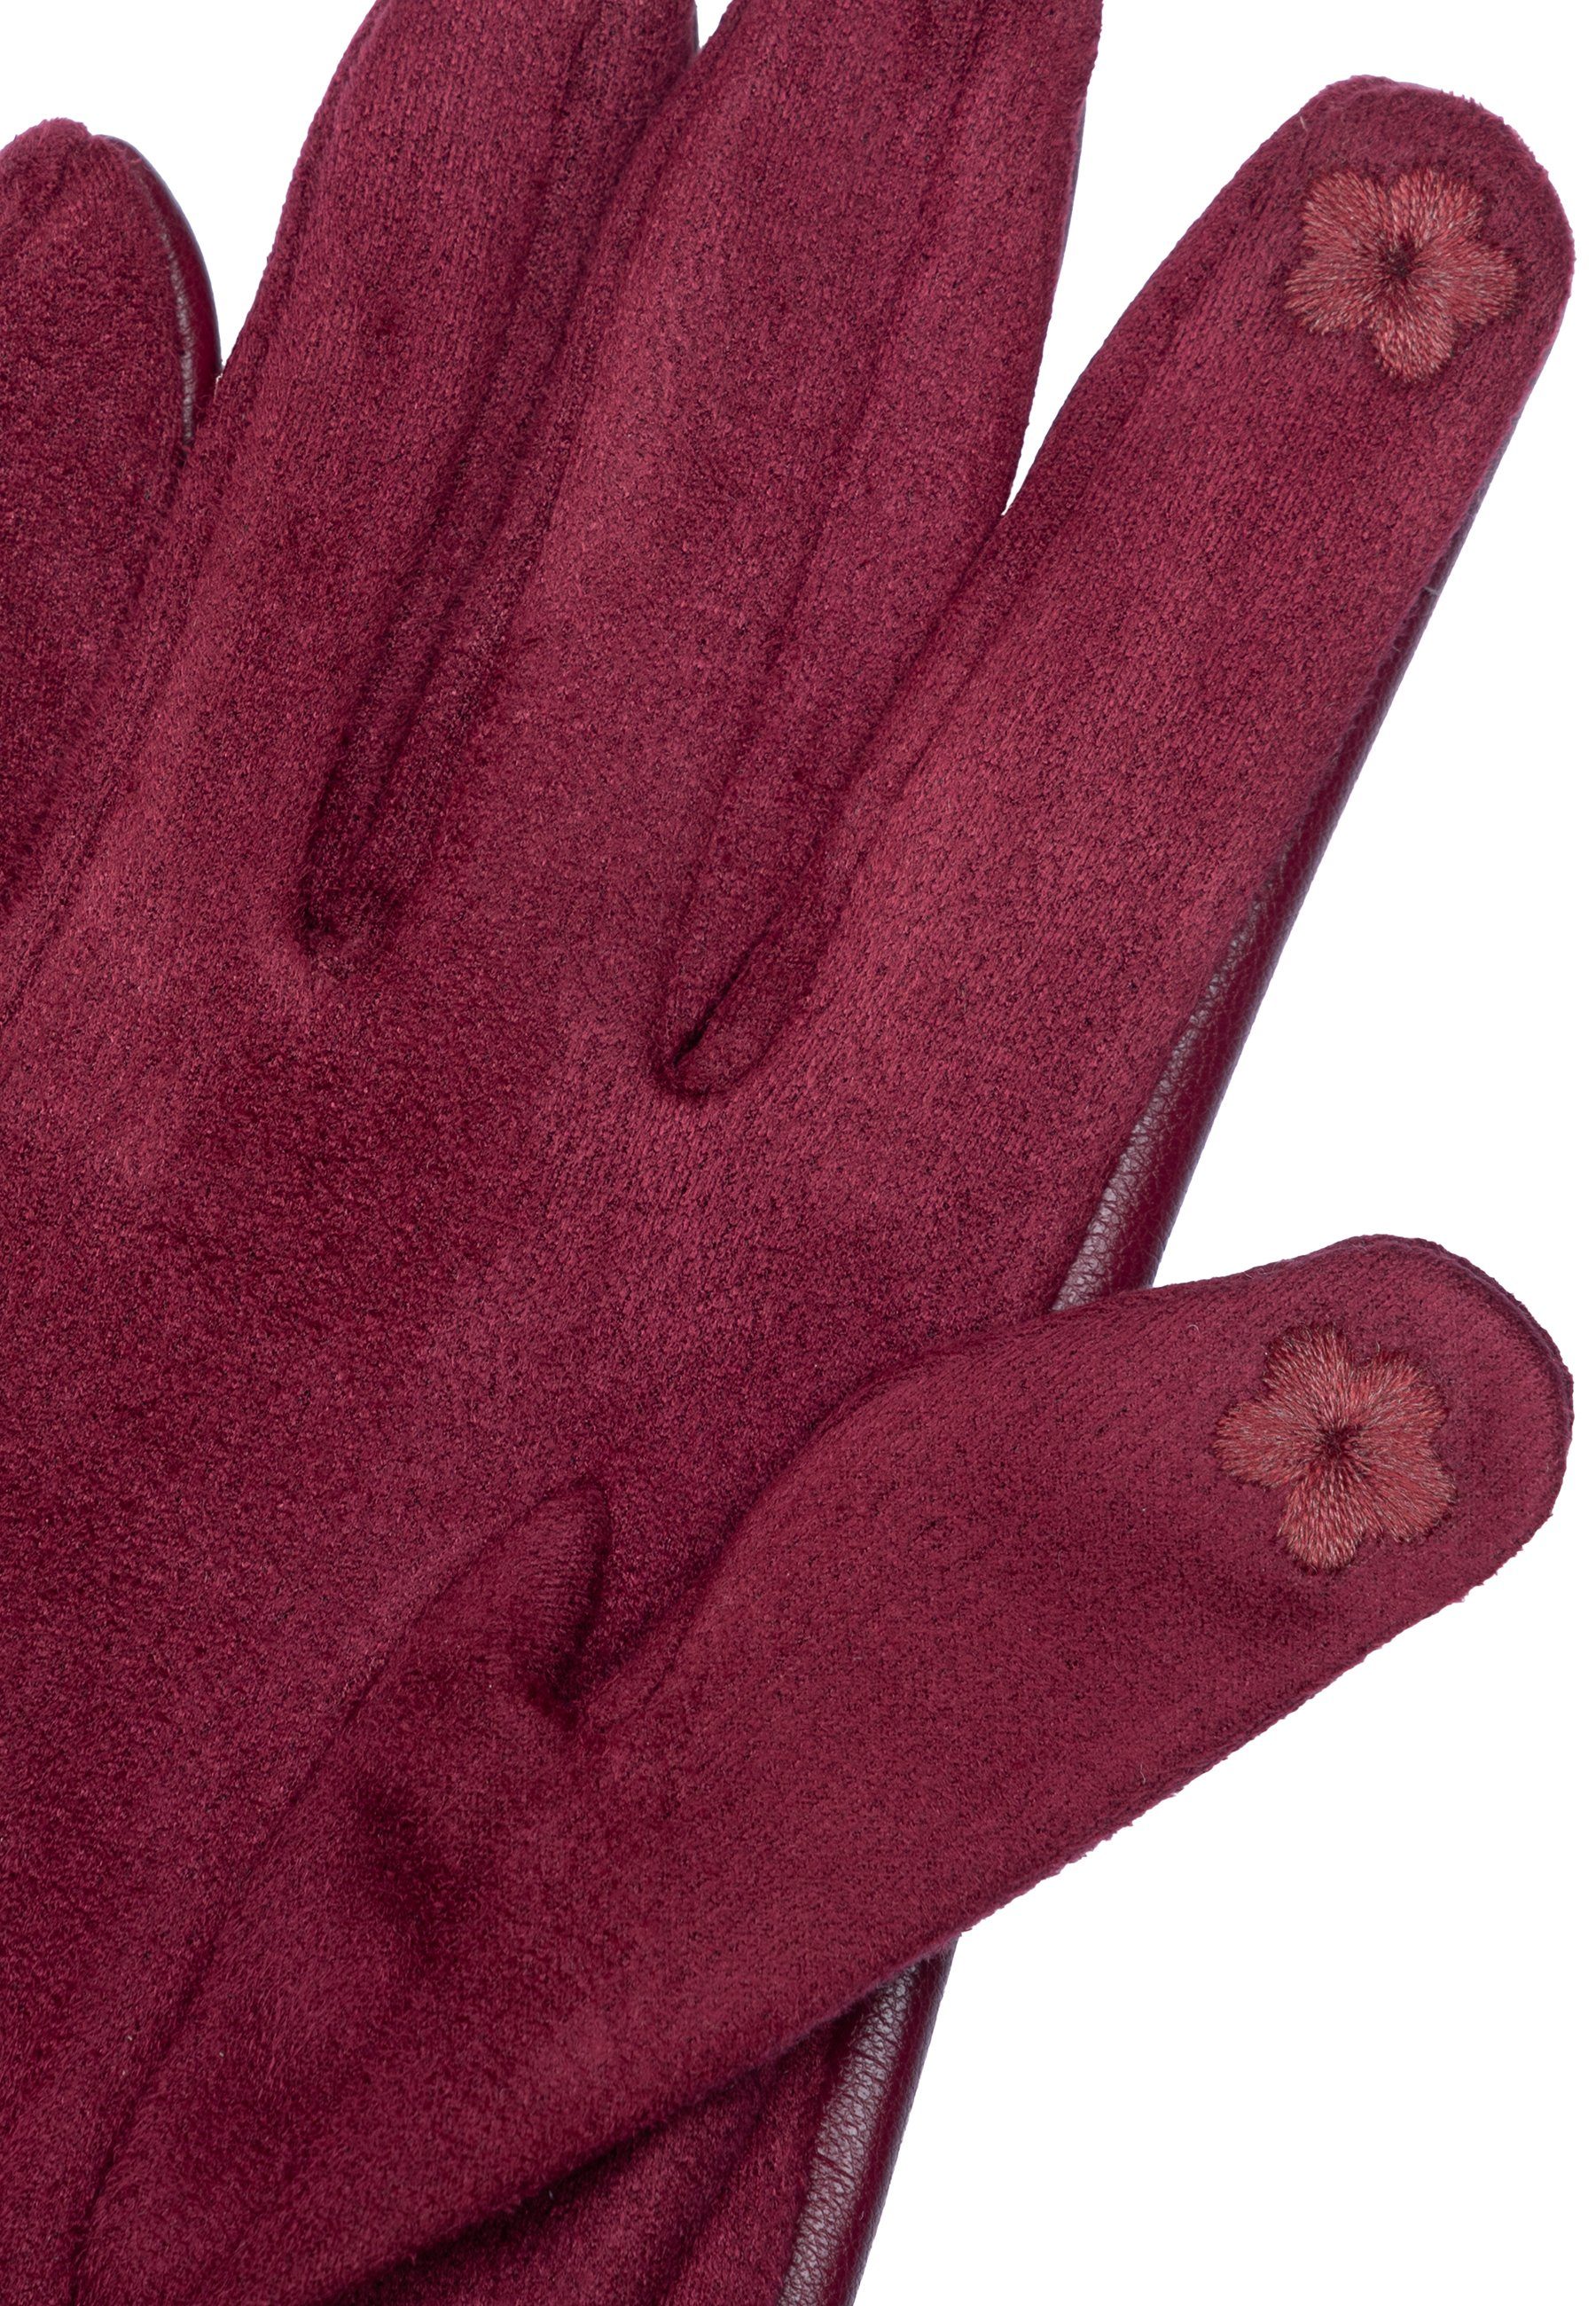 elegante Damen GLV016 weinrot Handschuhe uni klassisch Strickhandschuhe Caspar